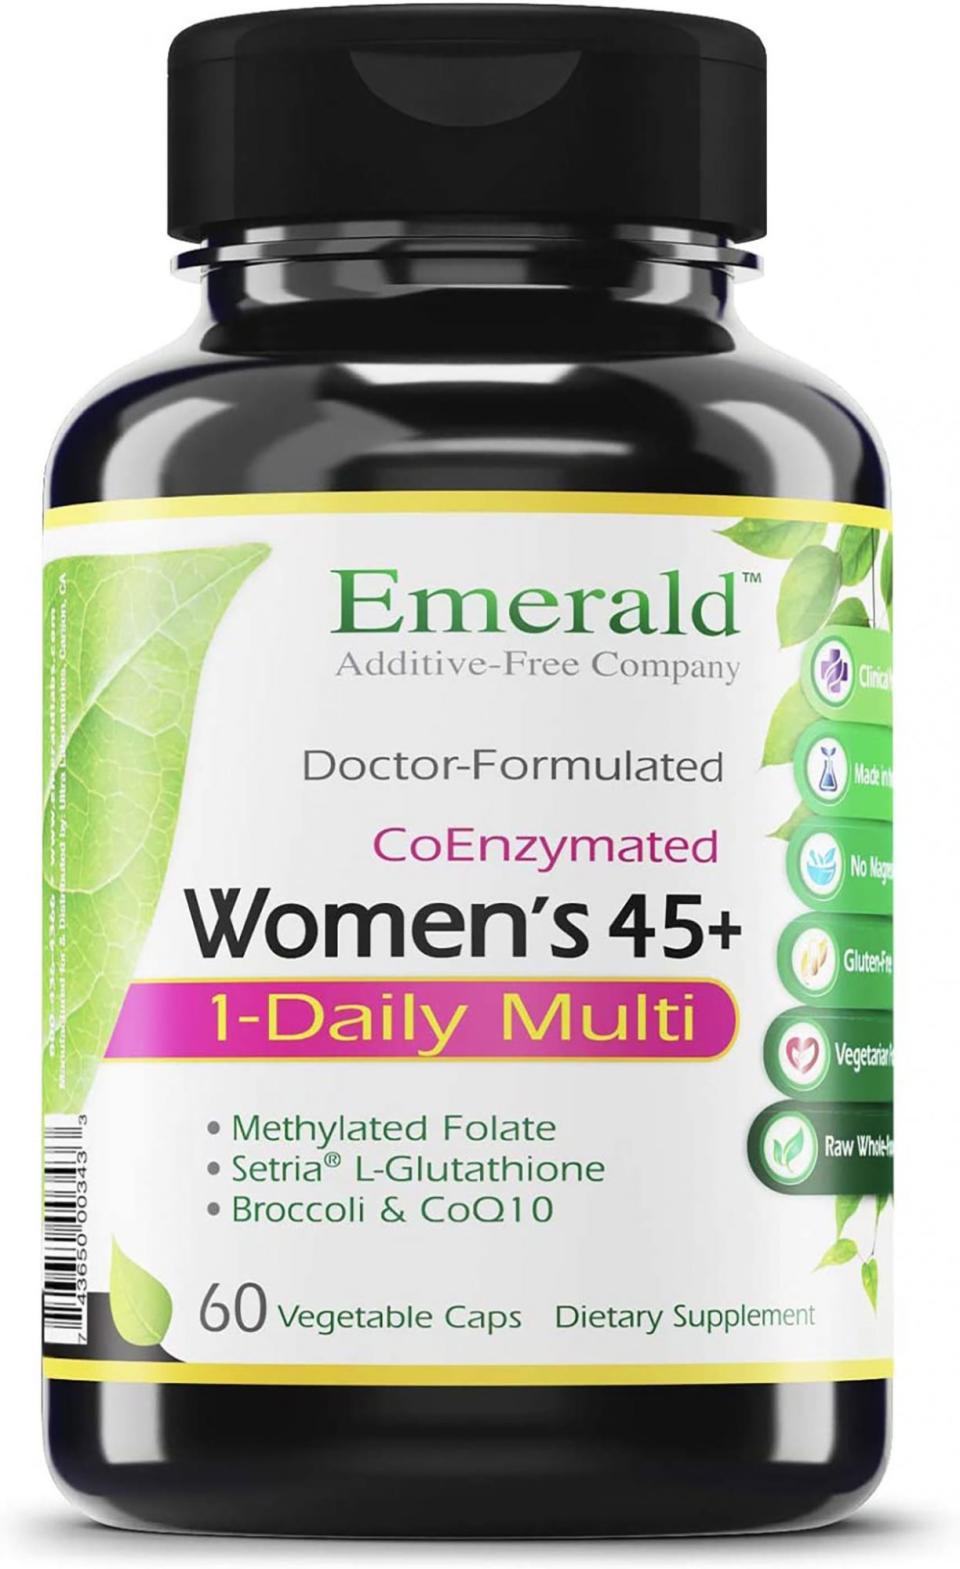 Emerald Women's 45+ One-Daily